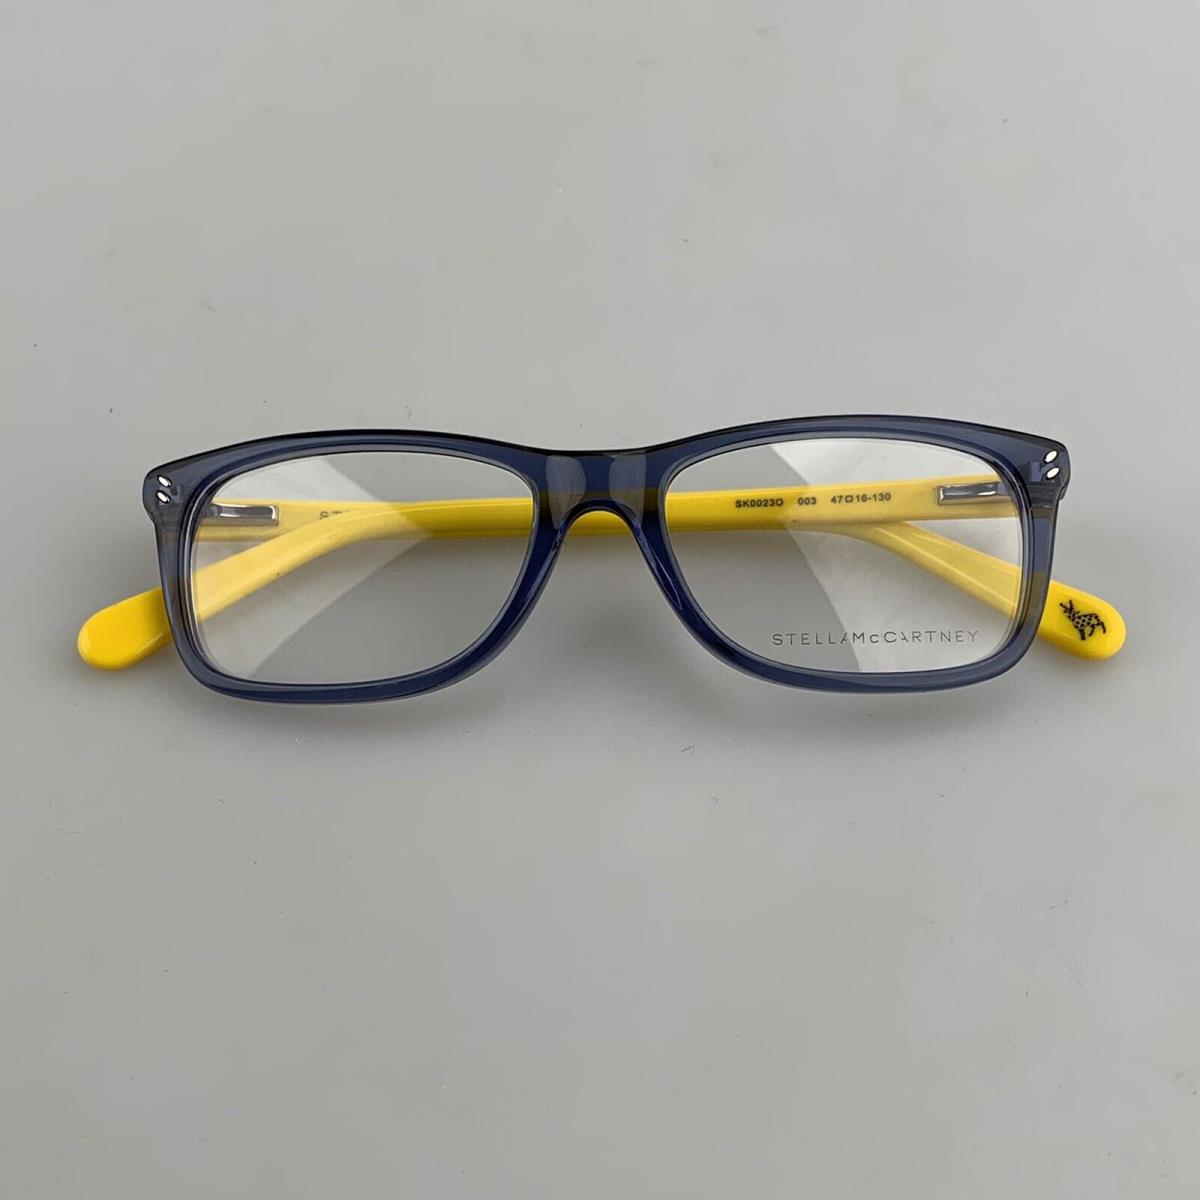 Stella McCartney eyeglasses  - Blue Frame 7